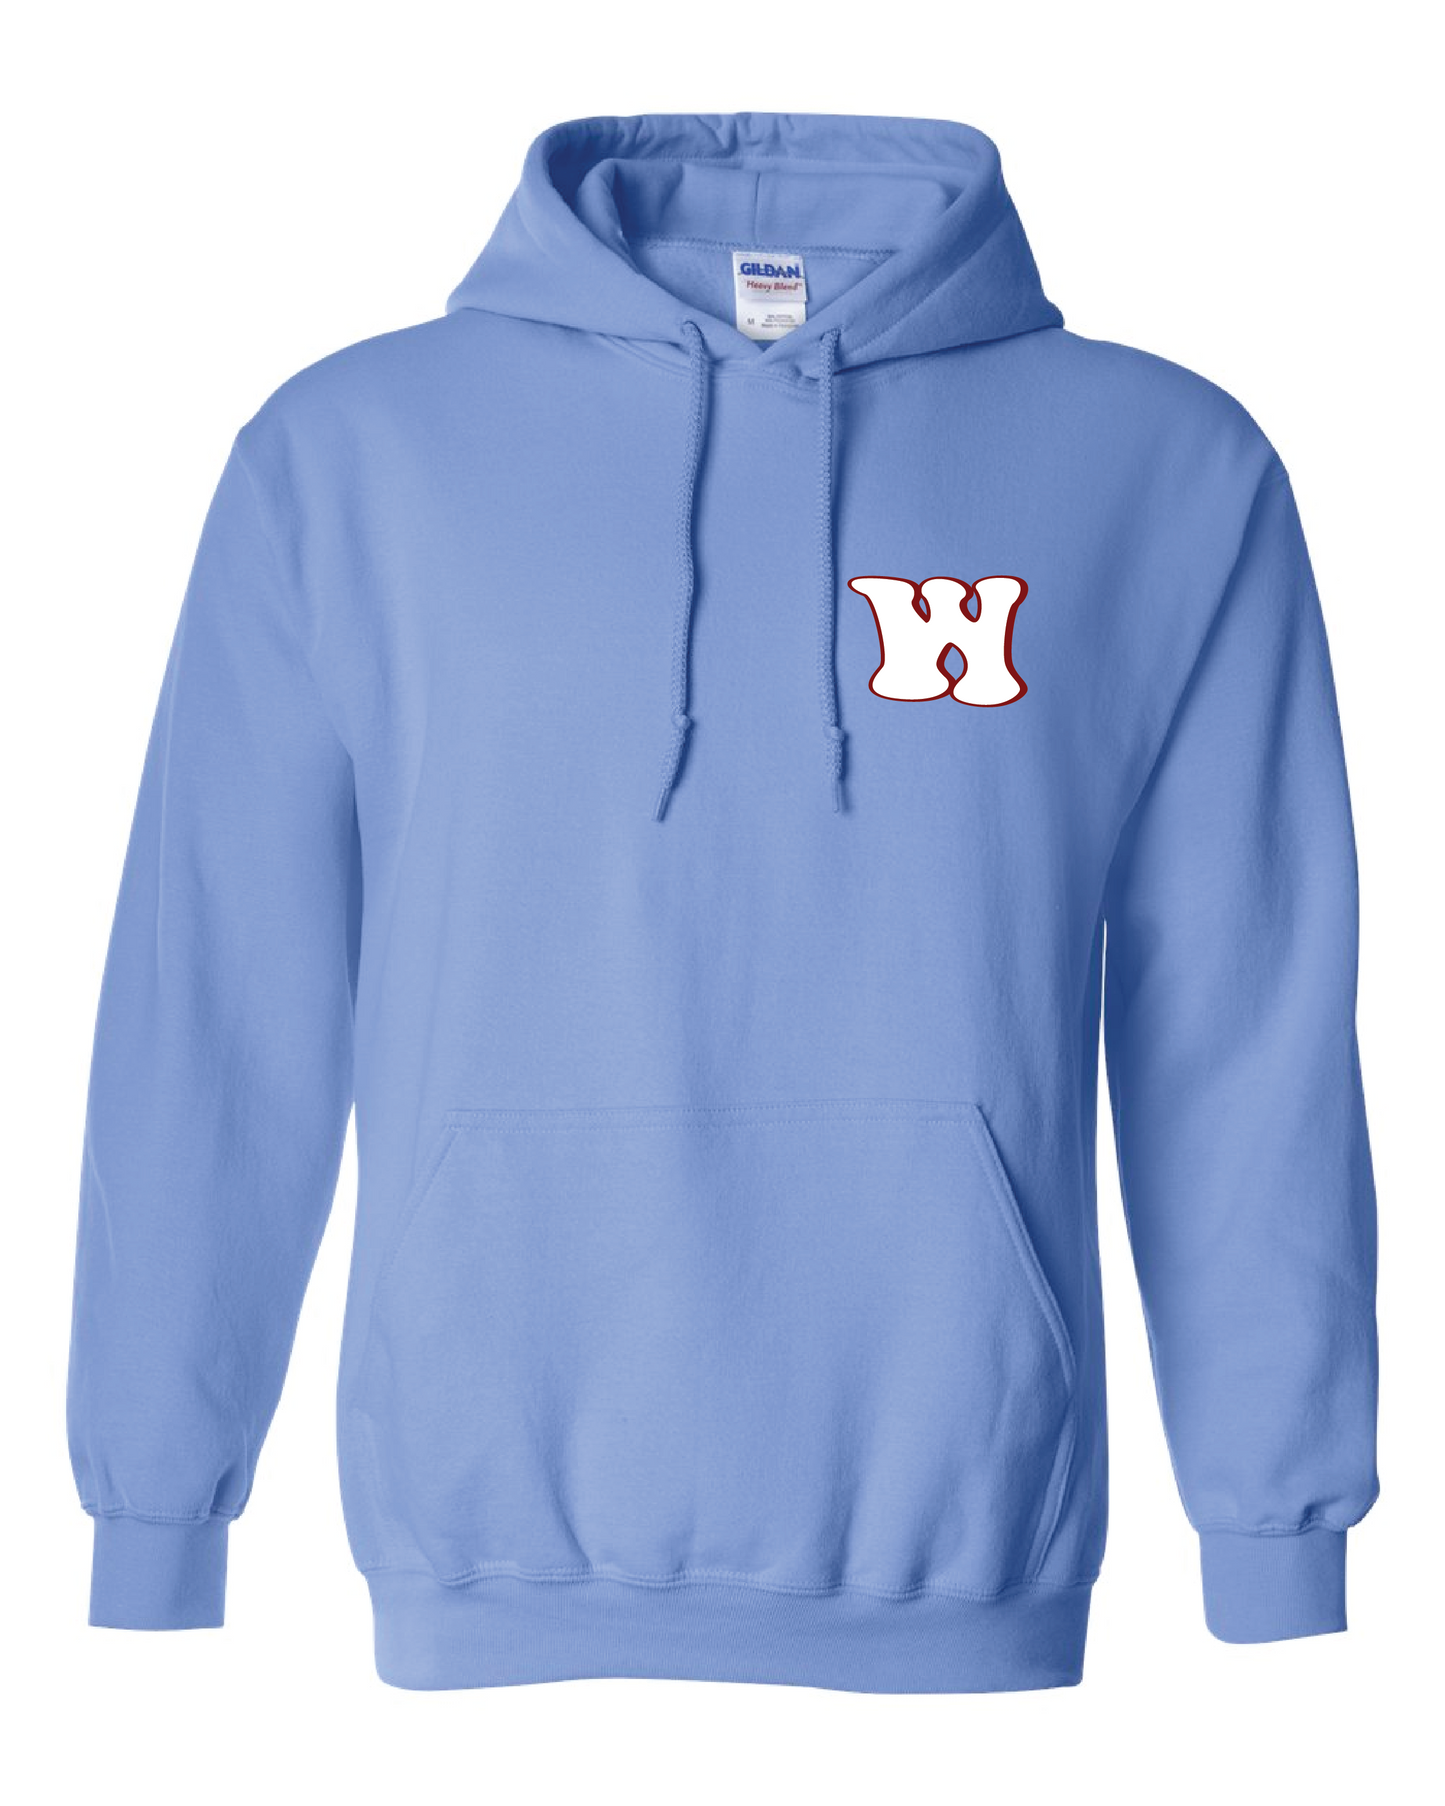 We Love Our Washington School Hooded Sweatshirt Carolina Blue